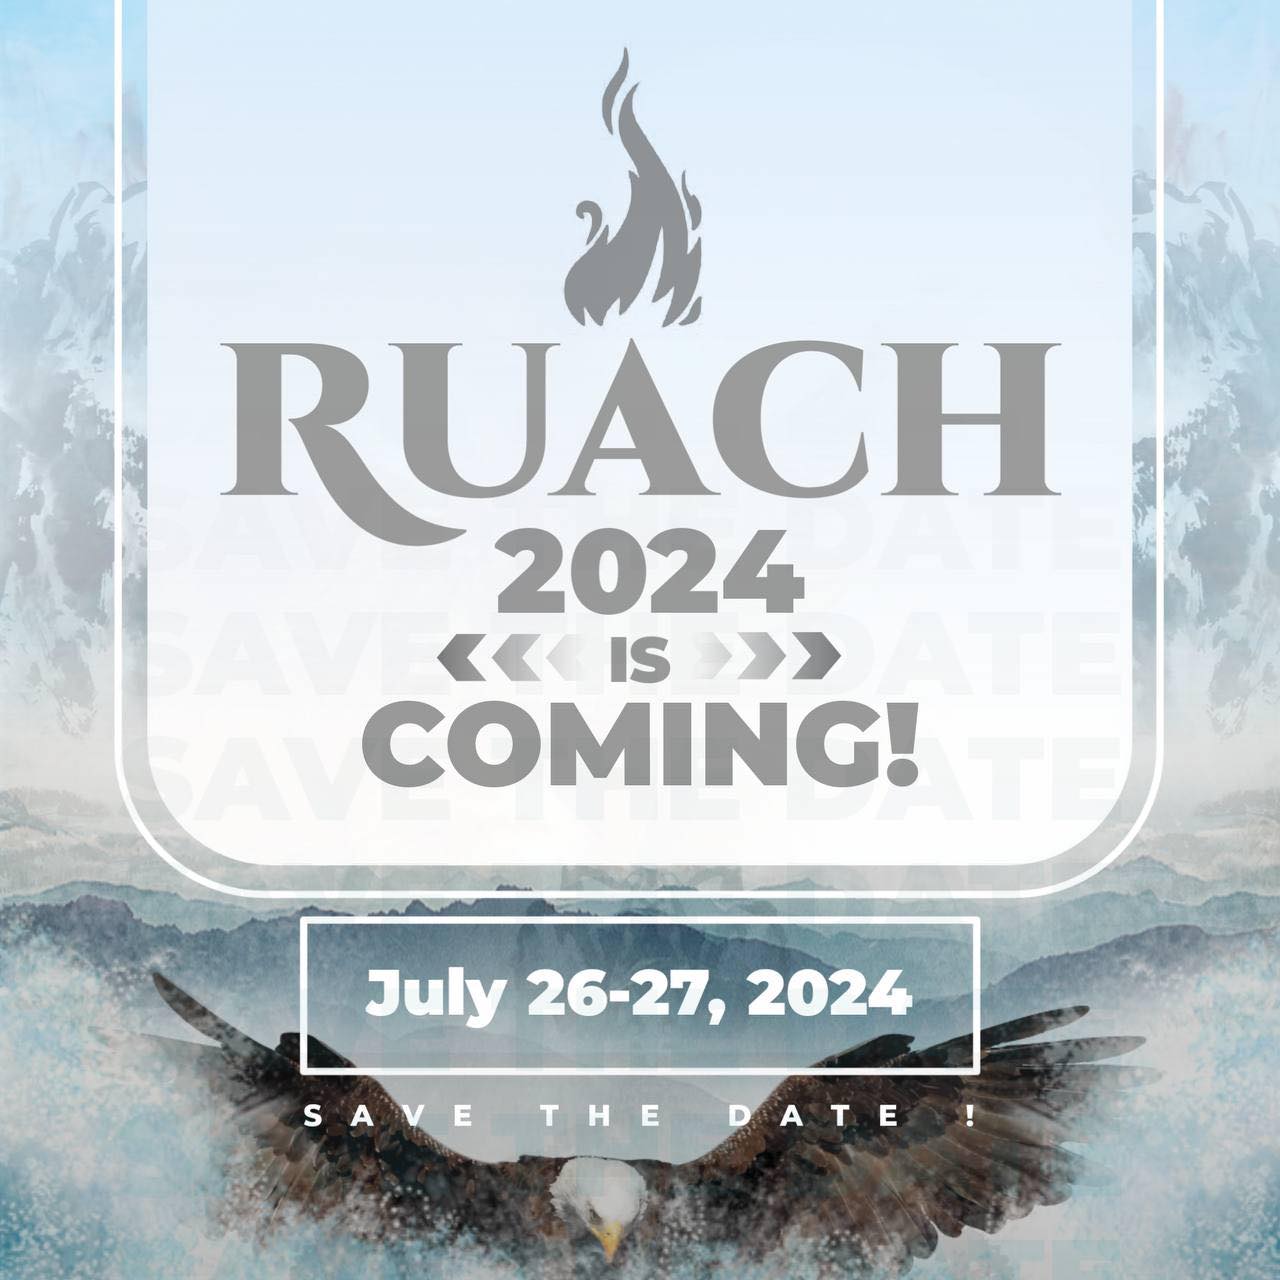 Ruach 2024